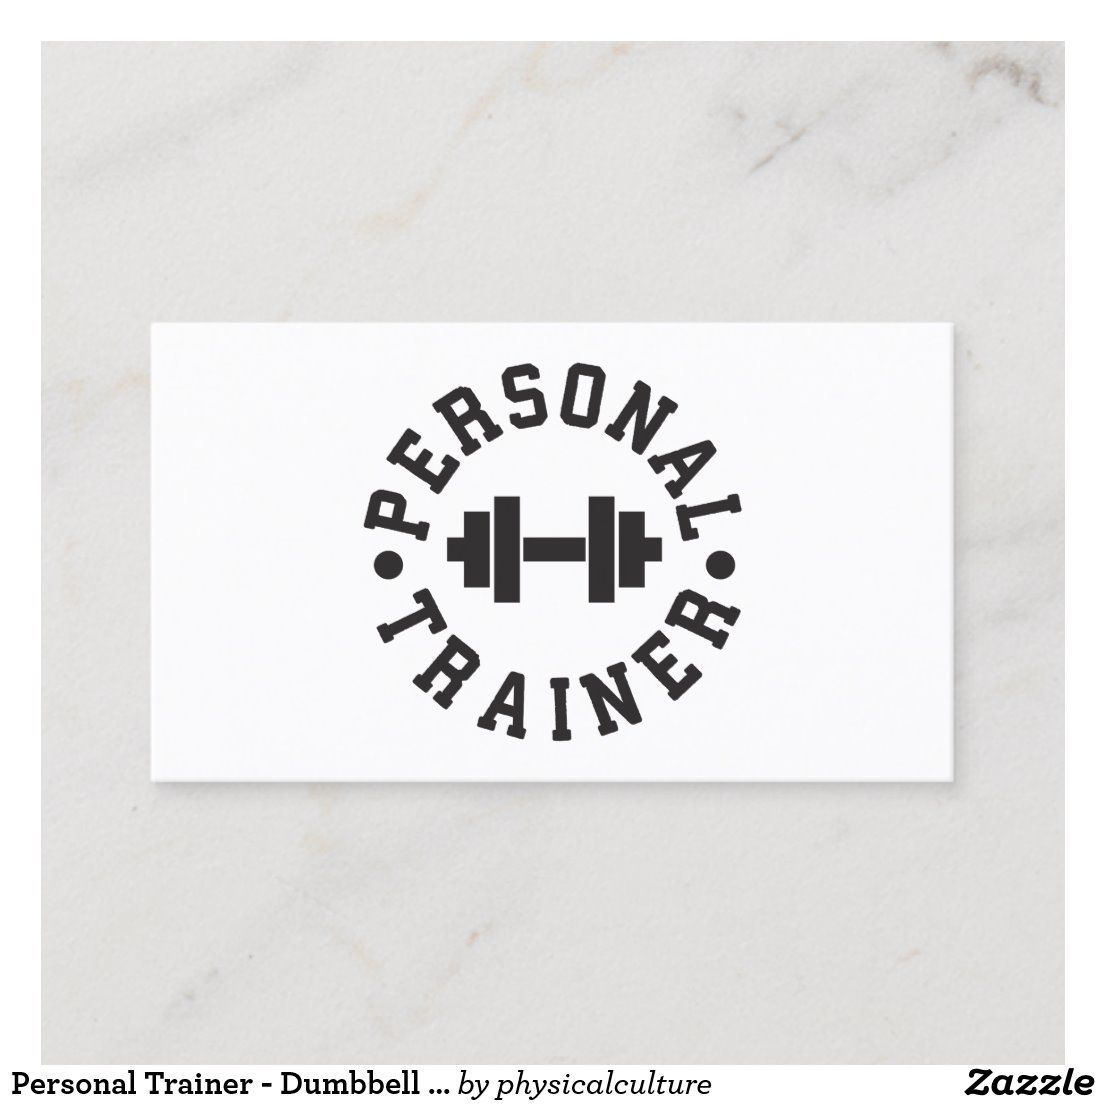 Personal Trainer - Dumbbell Logo - Custom Business Card | Zazzle.com - Personal Trainer - Dumbbell Logo - Custom Business Card | Zazzle.com -   16 personal fitness Logo ideas